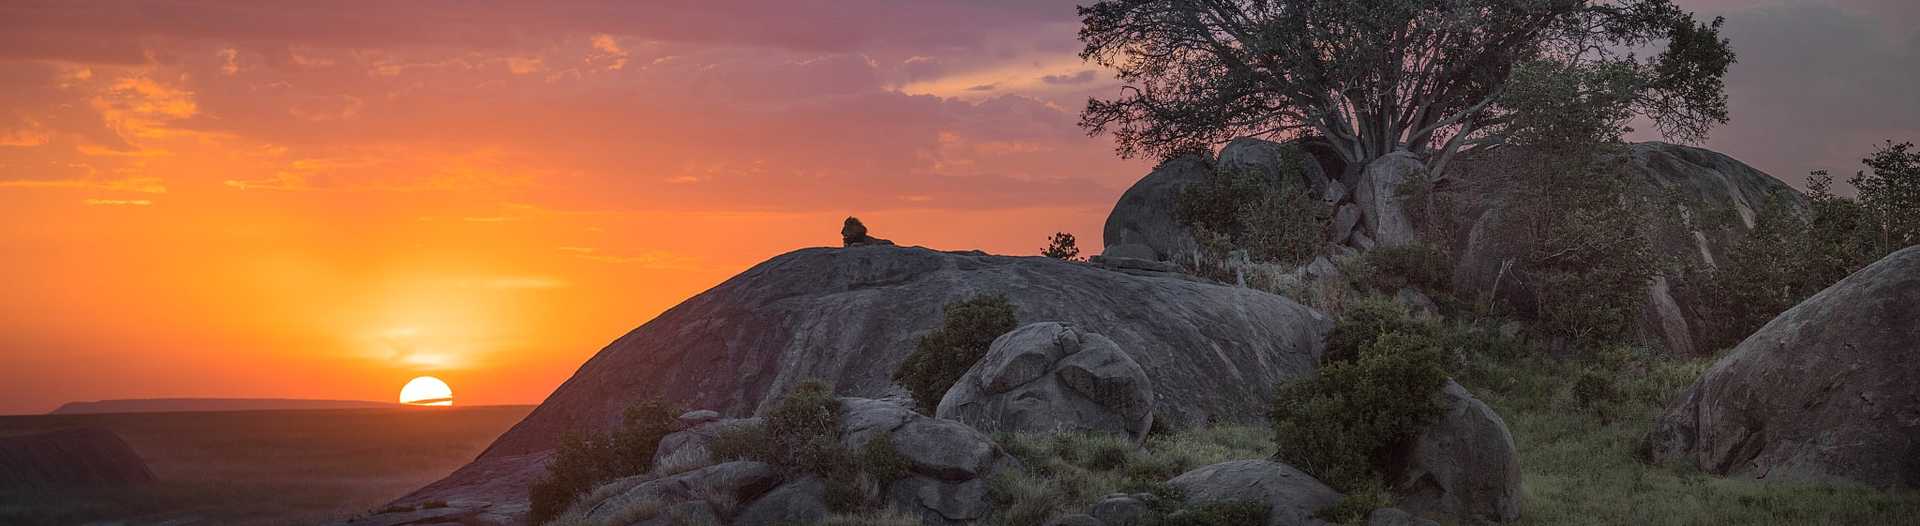 Silhouette of a lion a kopjes at sunset the Serengeti, Tanzania